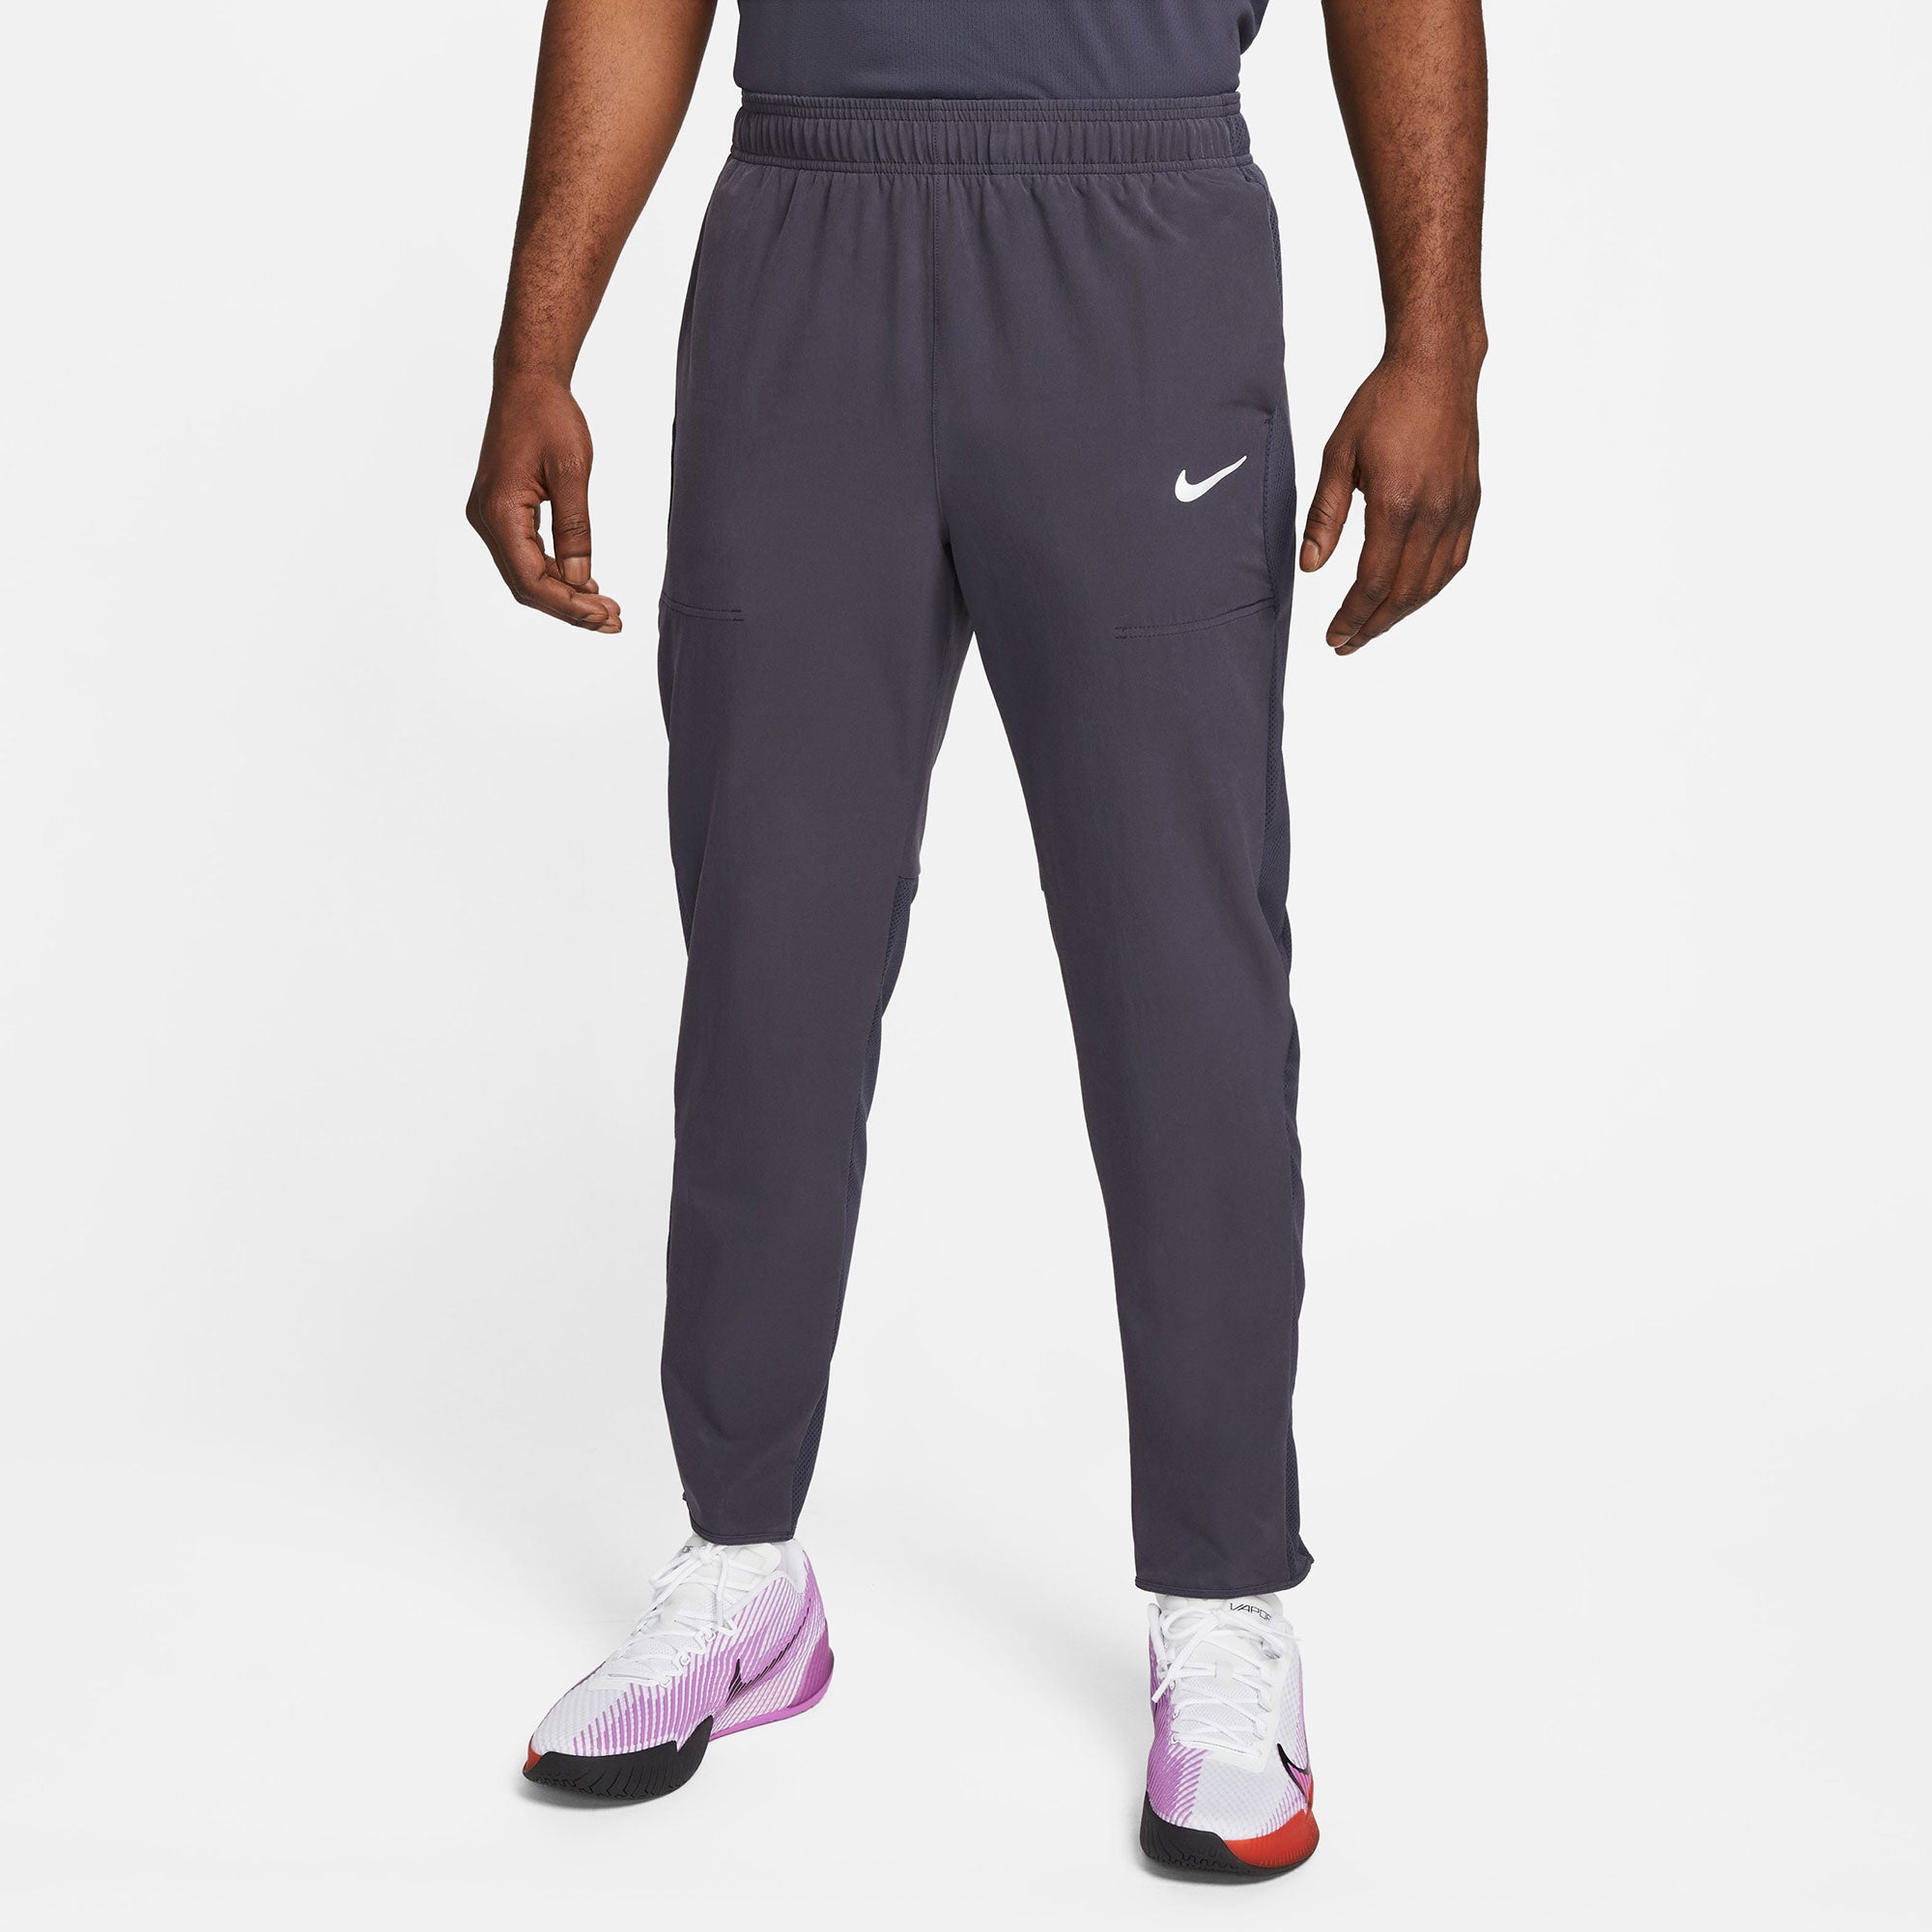 NikeCourt Advantage Men's Tennis Pants - Grey